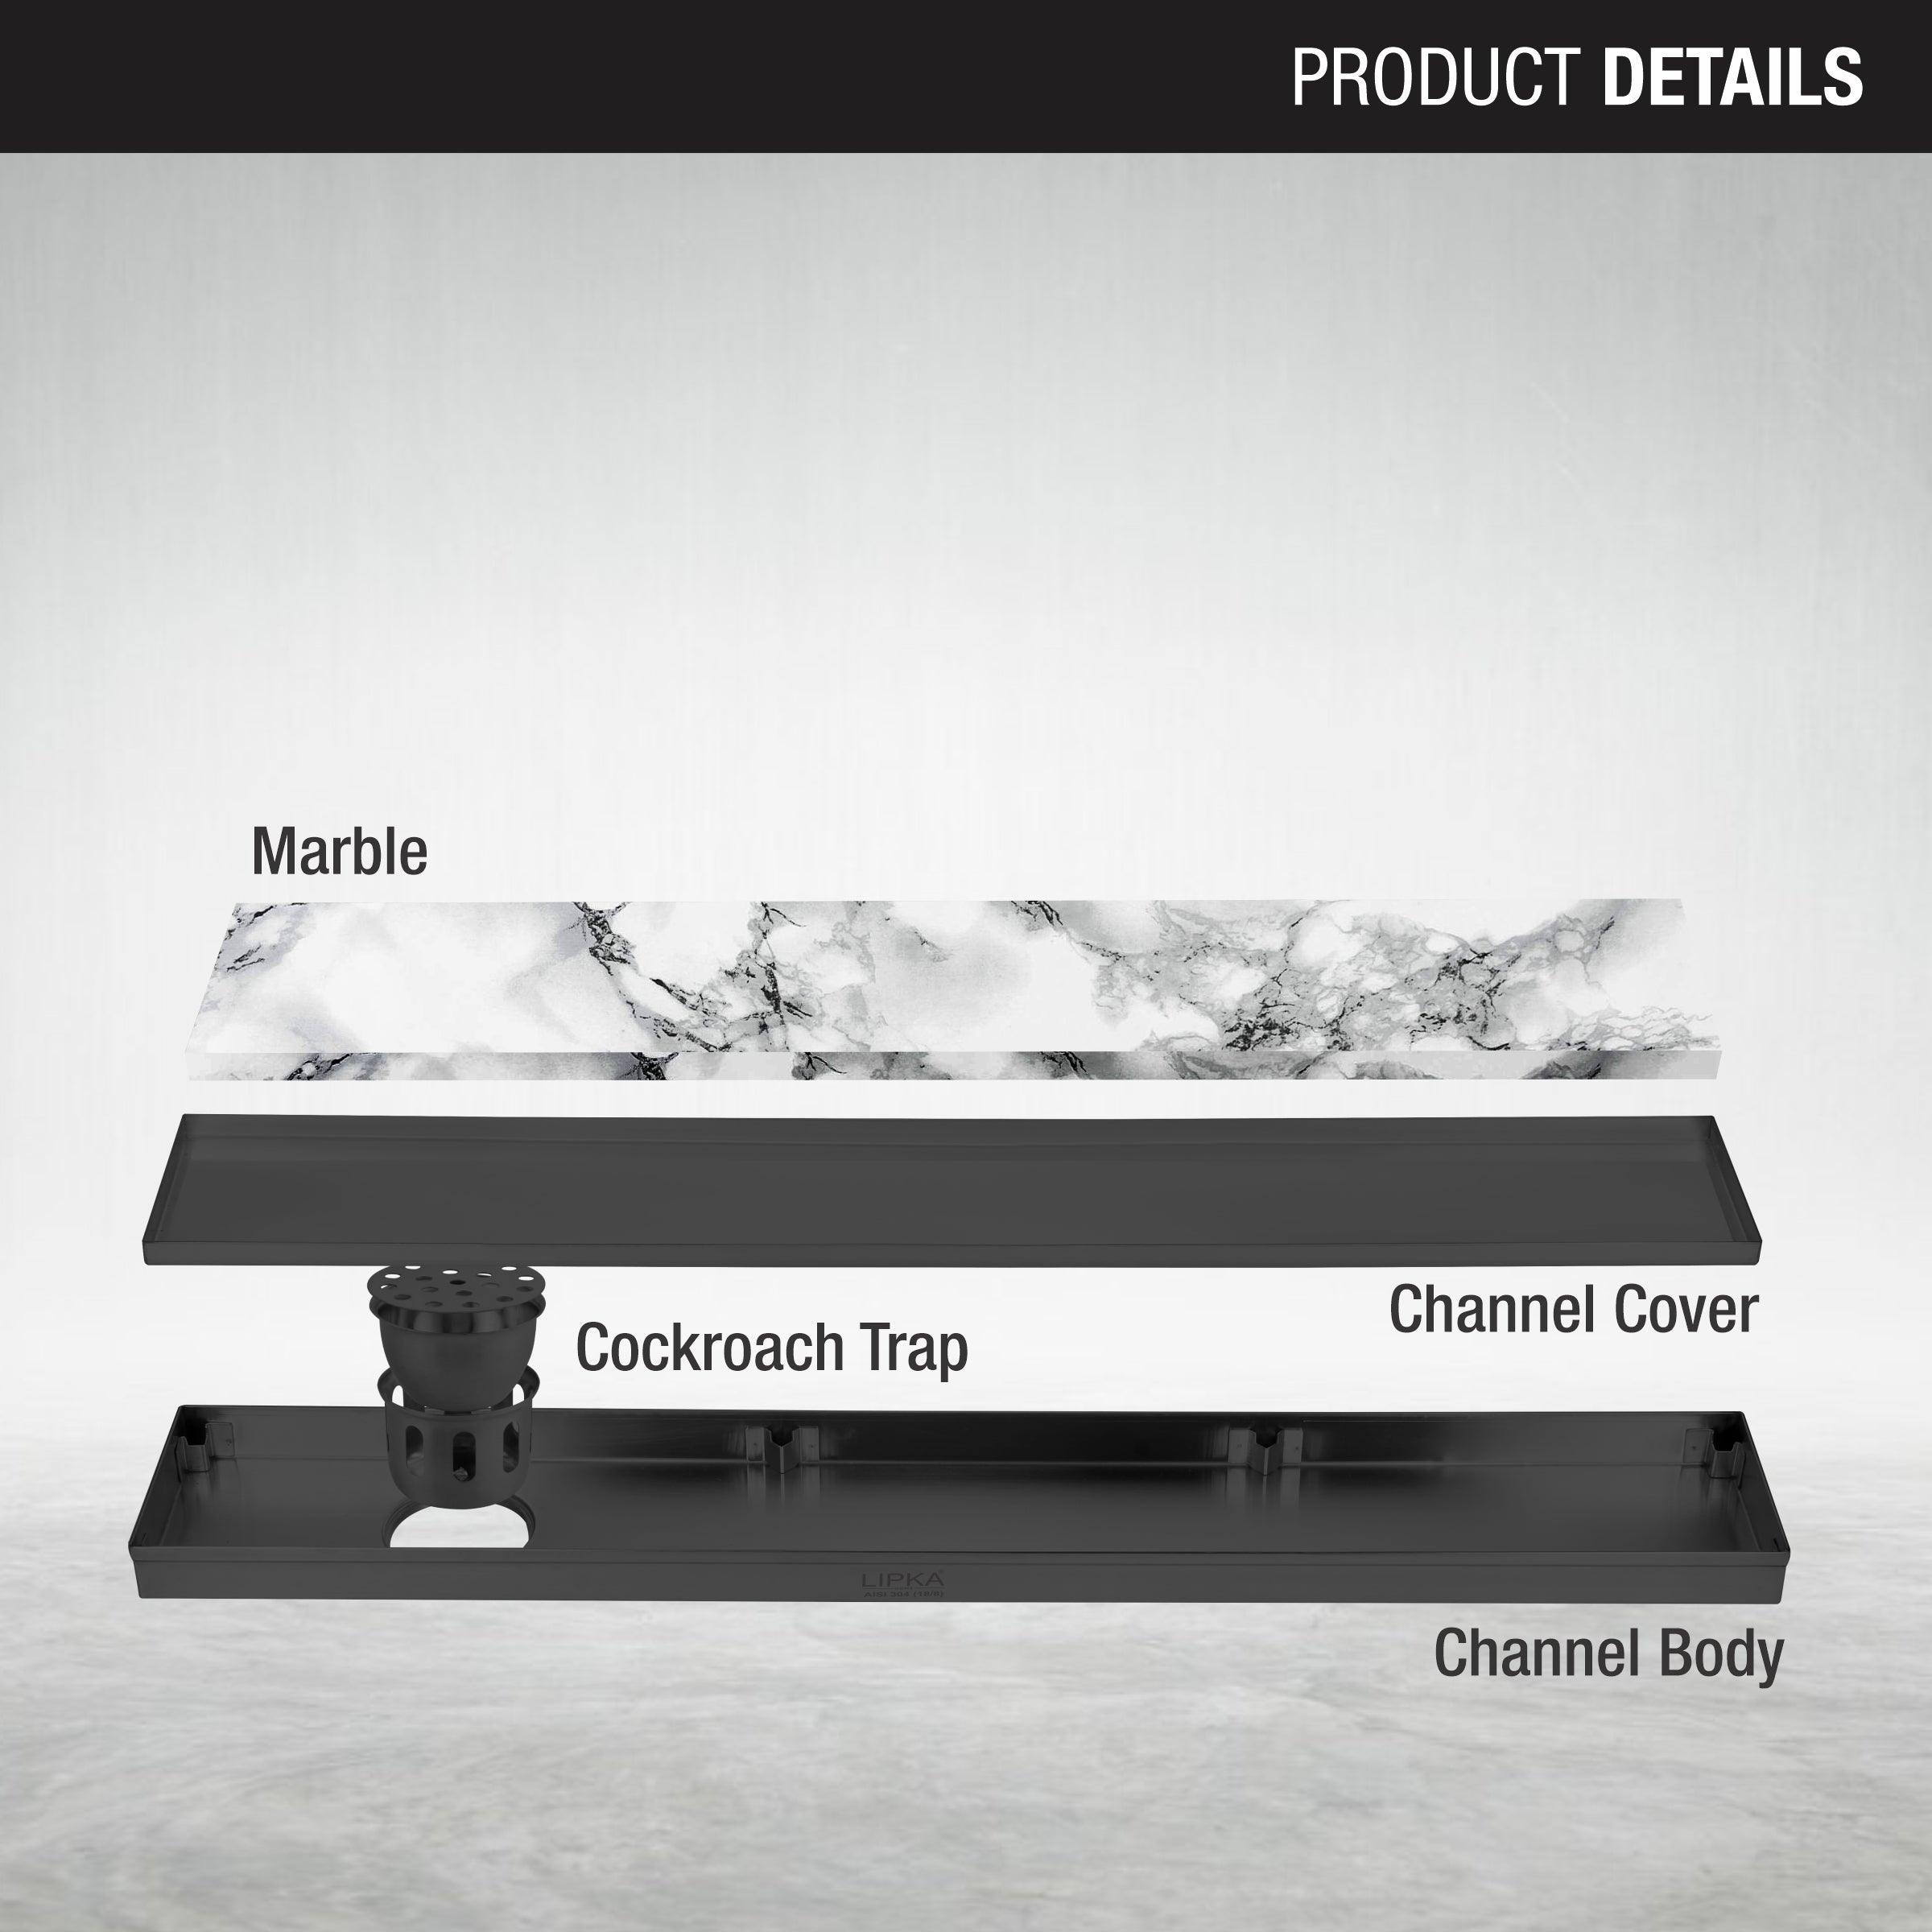 Marble Insert Shower Drain Channel - Black (48 x 5 Inches) - LIPKA - Lipka Home